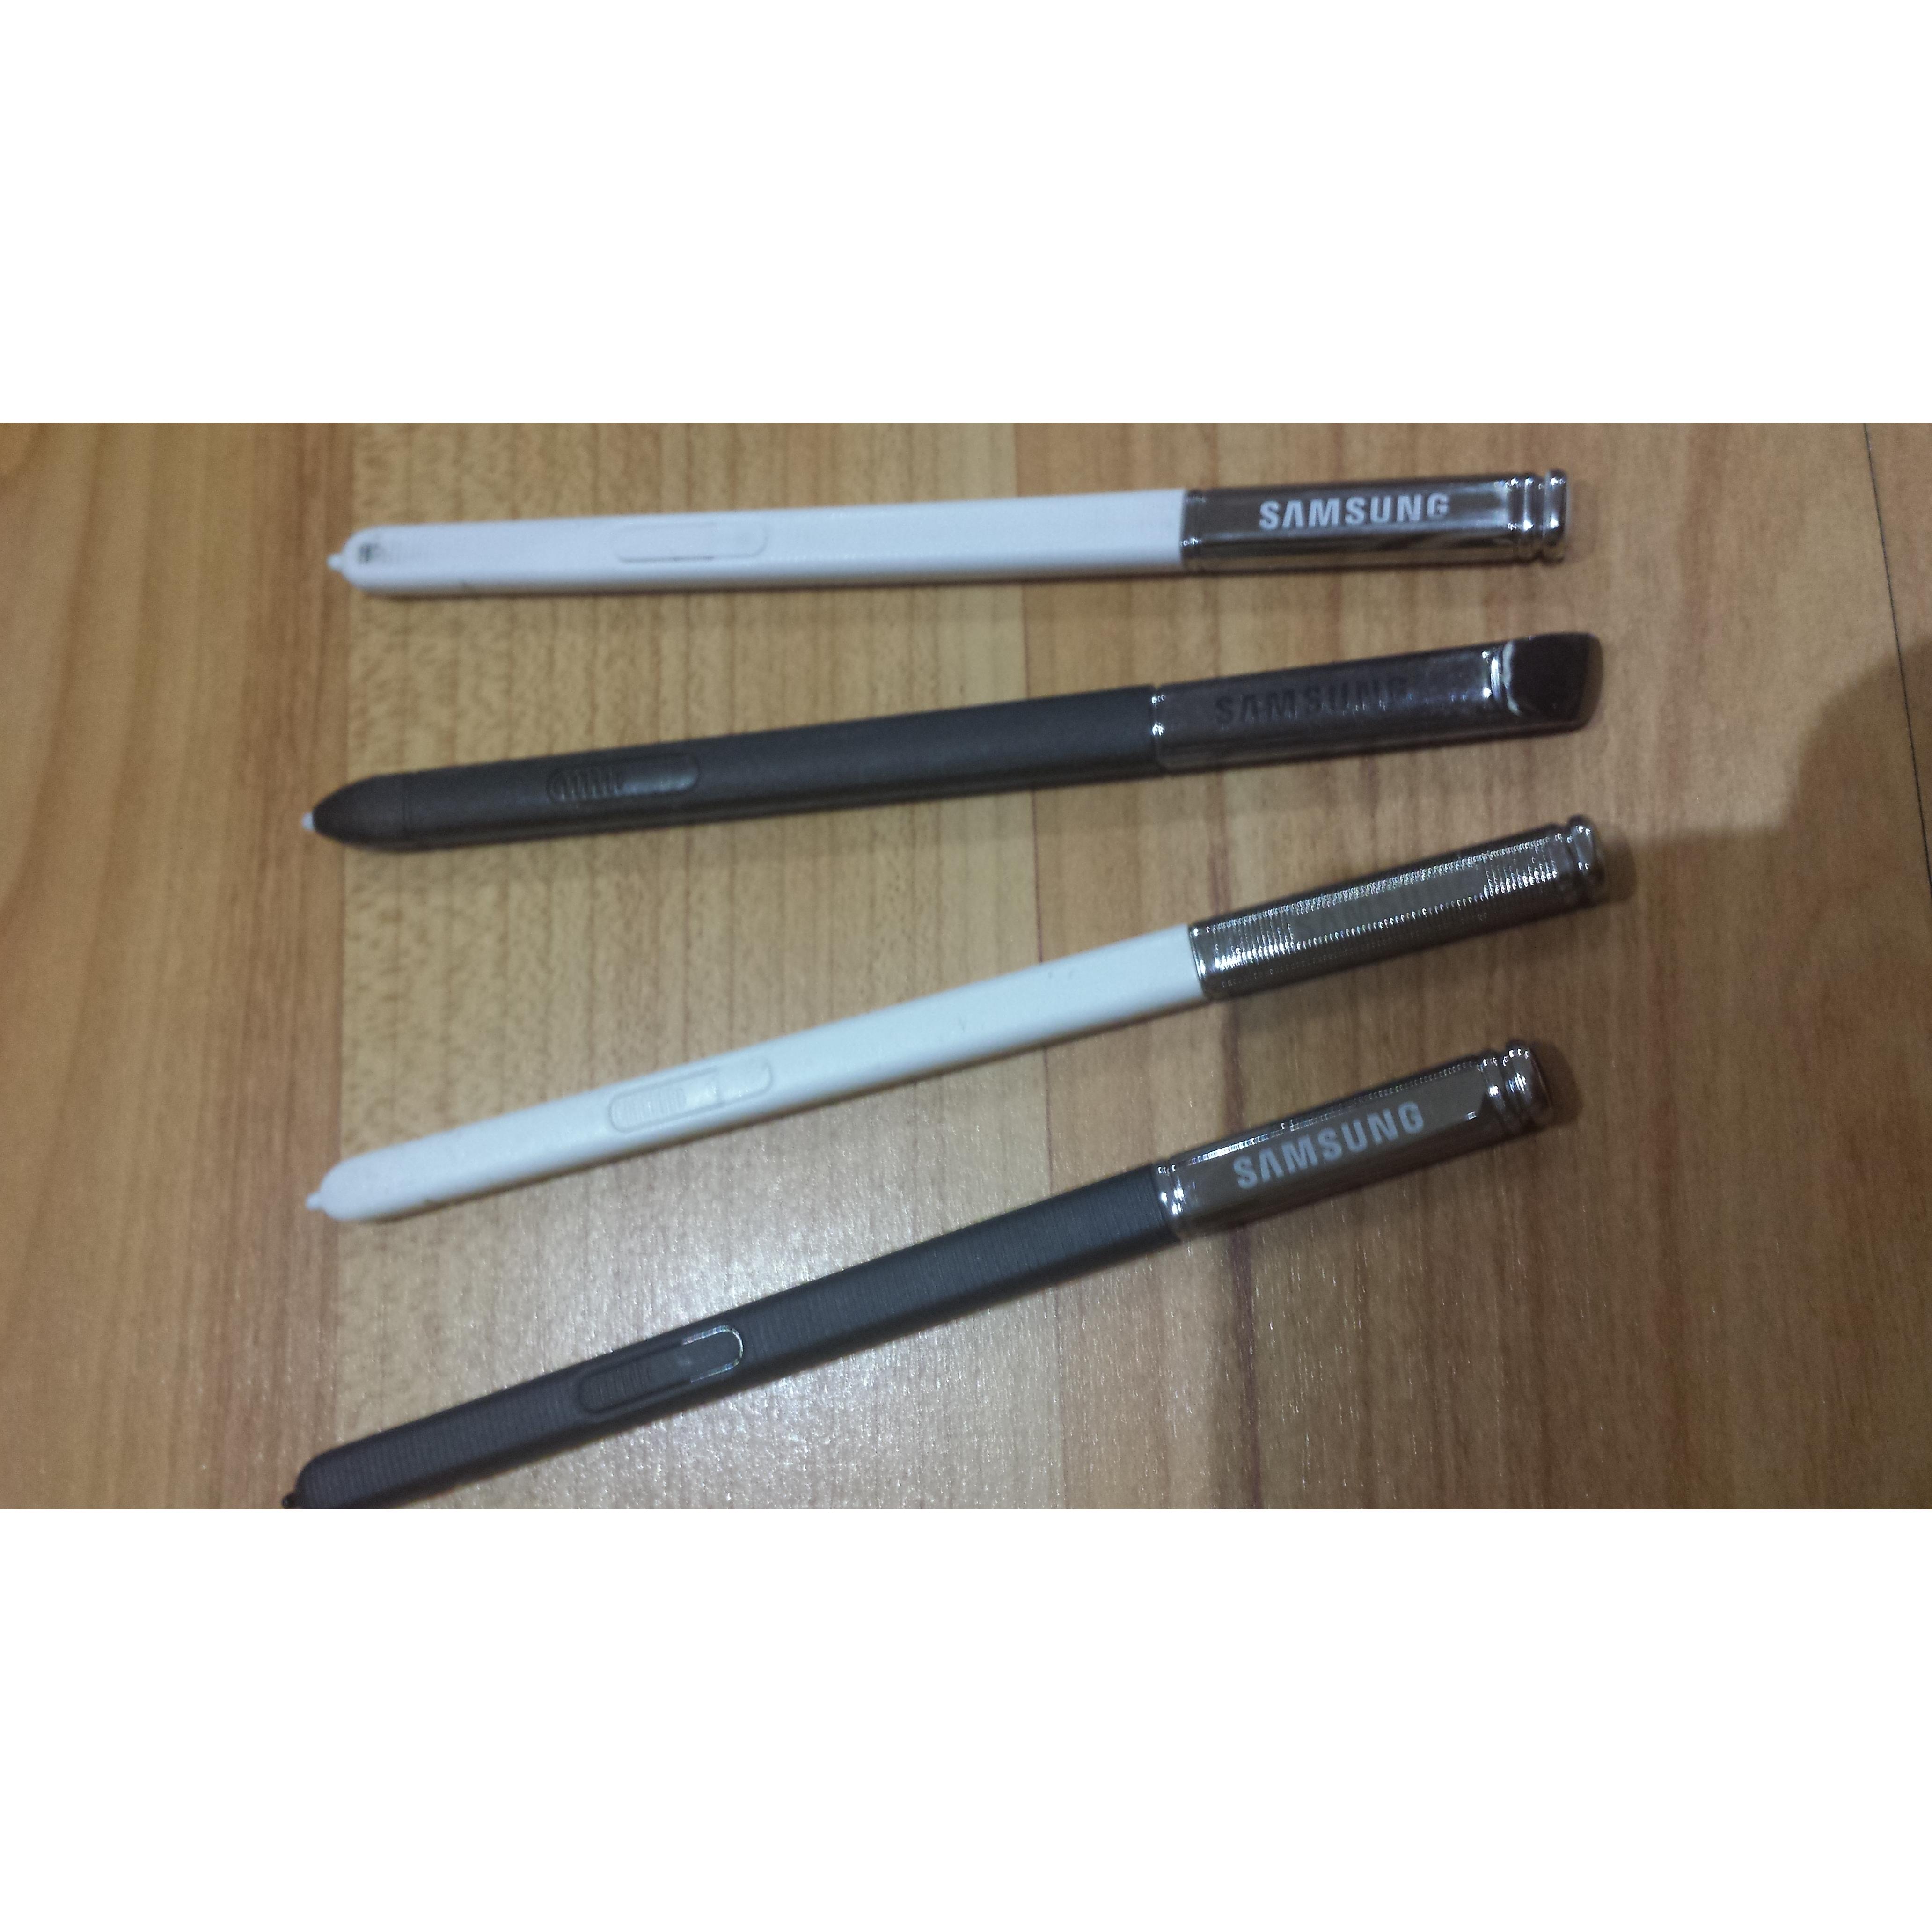 Samsung stylus pens Wholesale Suppliers